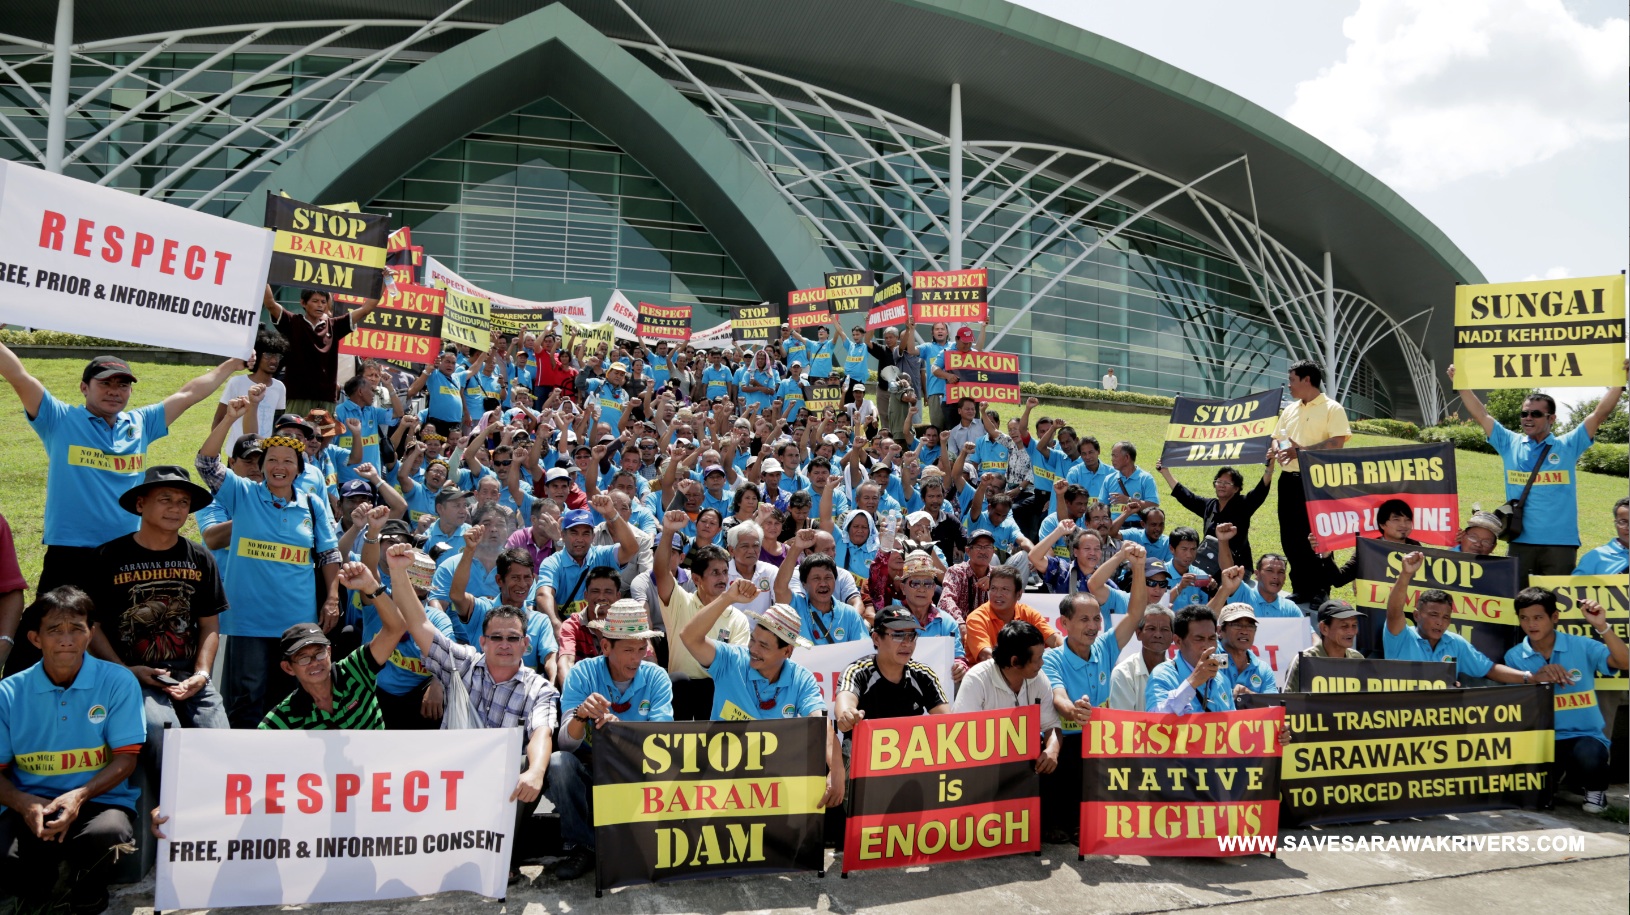 http://intercontinentalcry.org/wp-content/uploads/2013/05/01_kuching_dams_protest_iha_2013_05_22.jpg